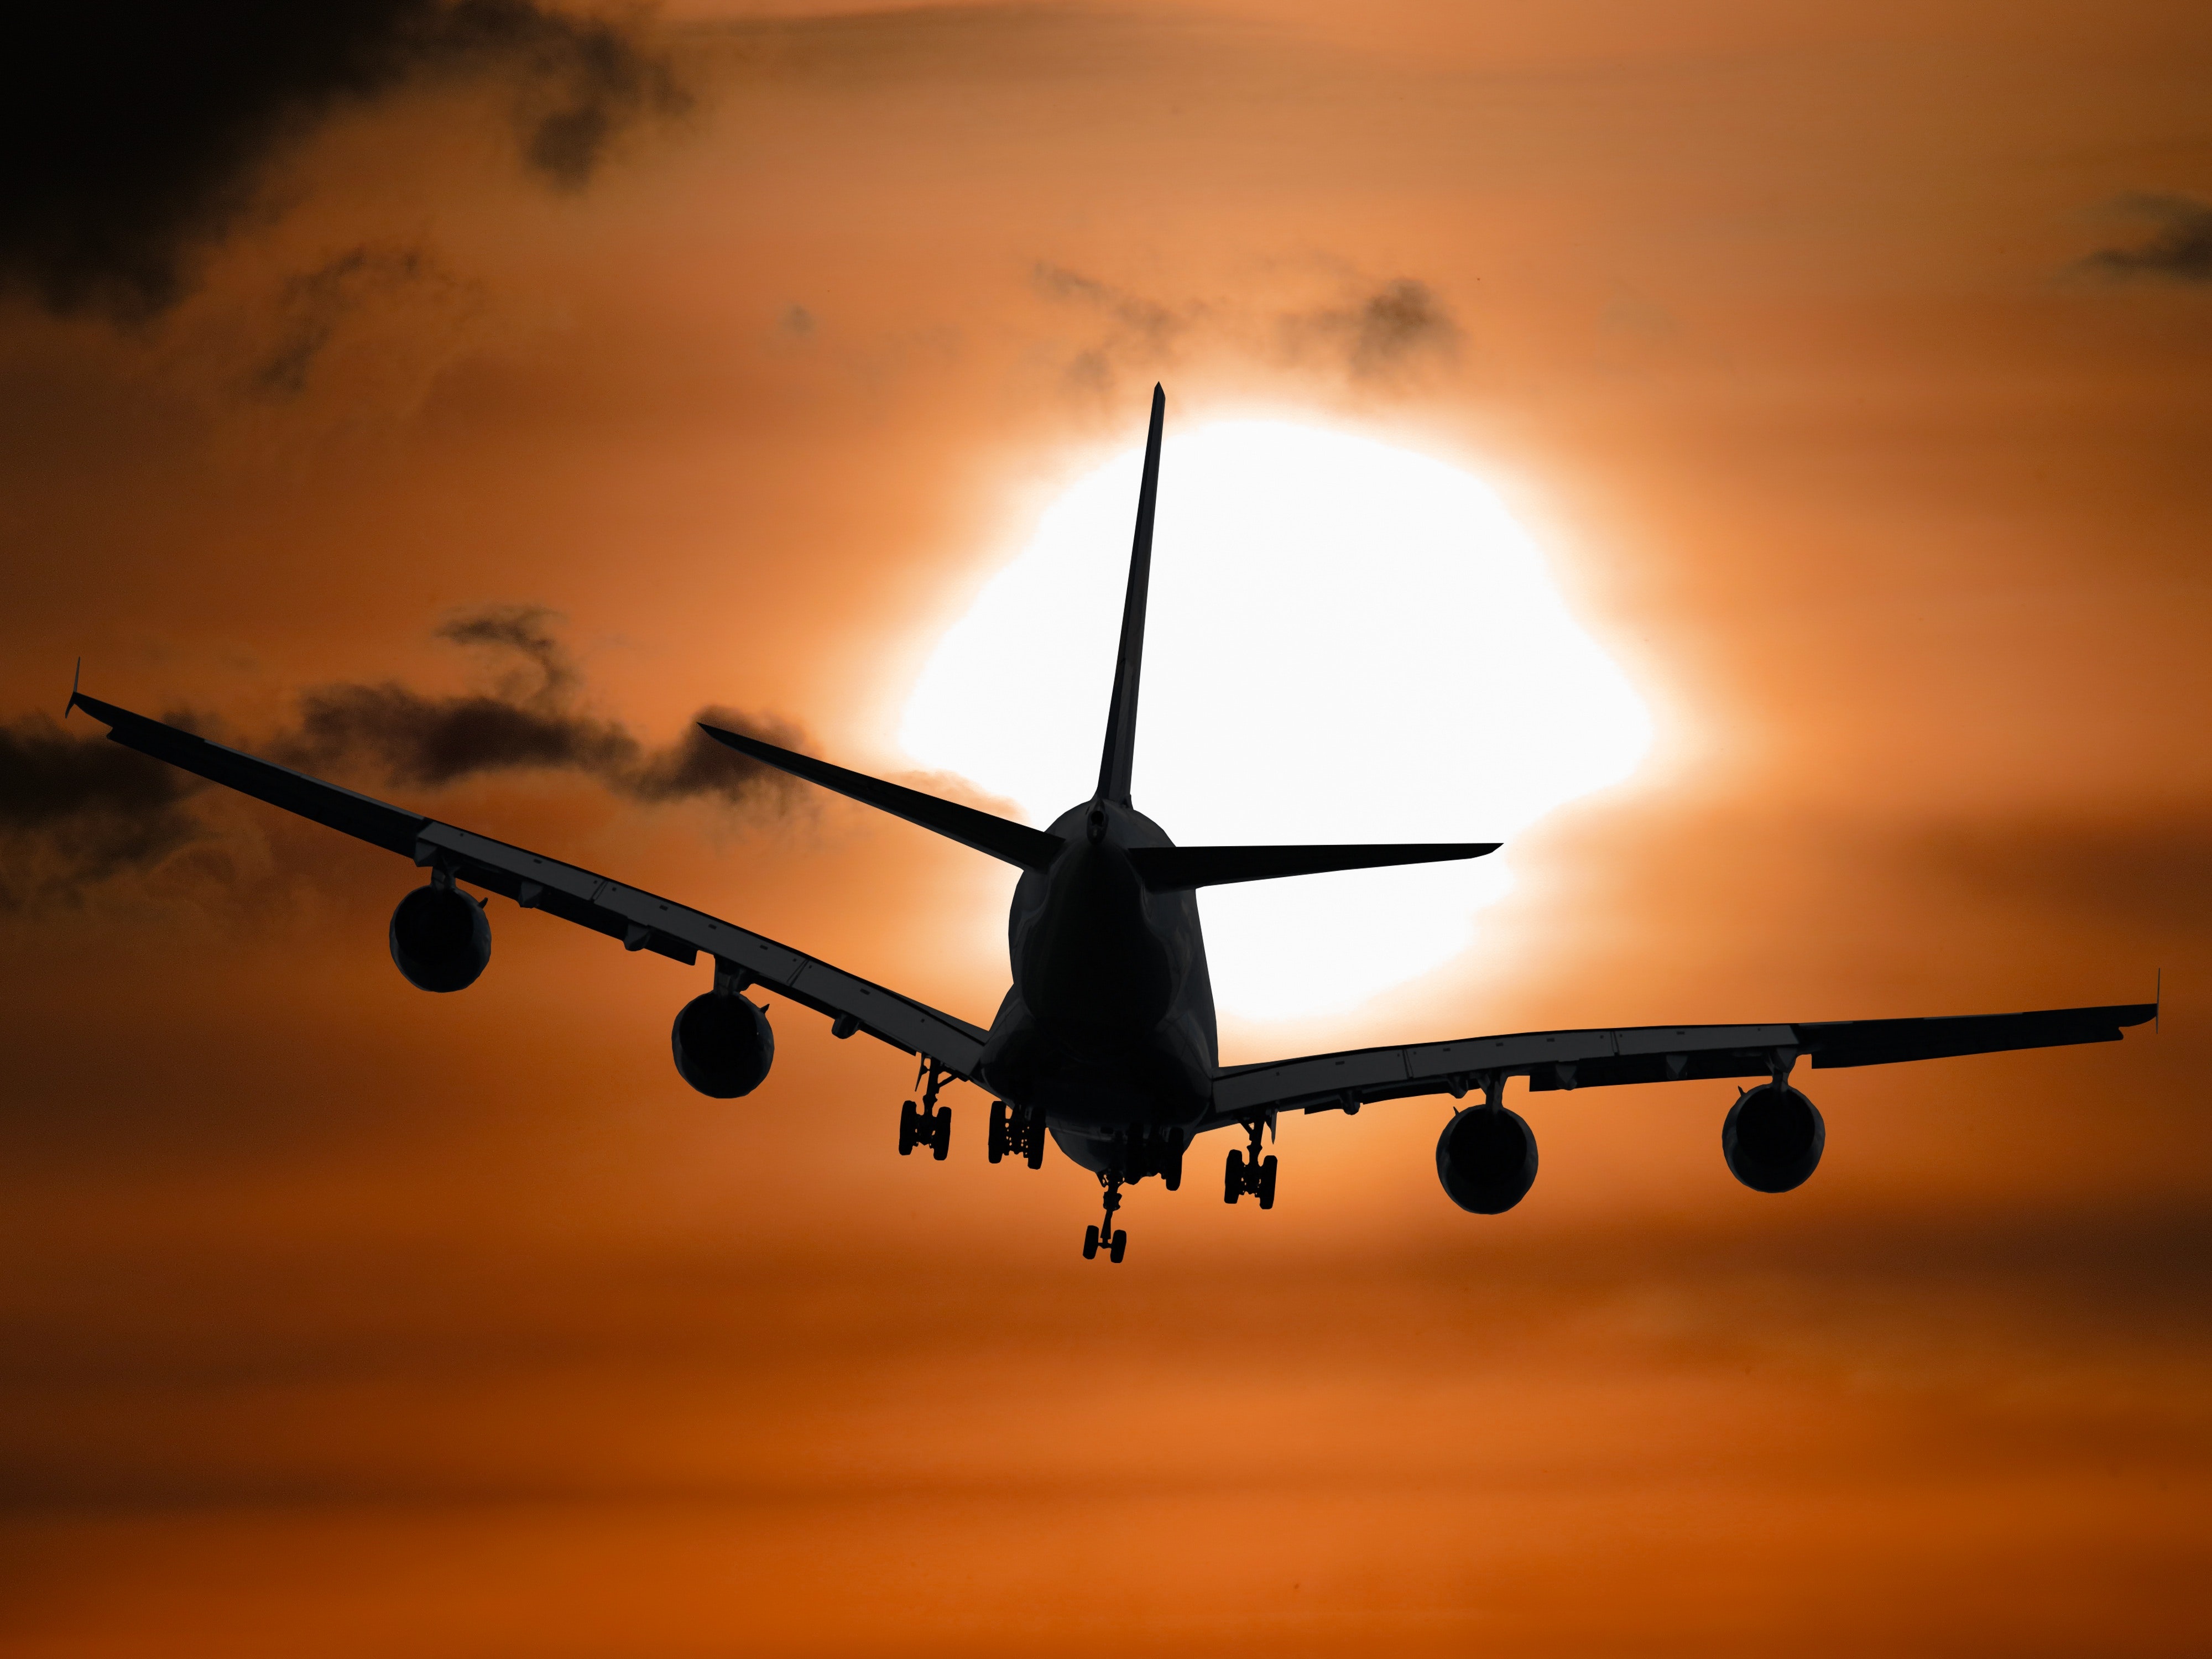 Plane flying during sunset | Source: Pexels